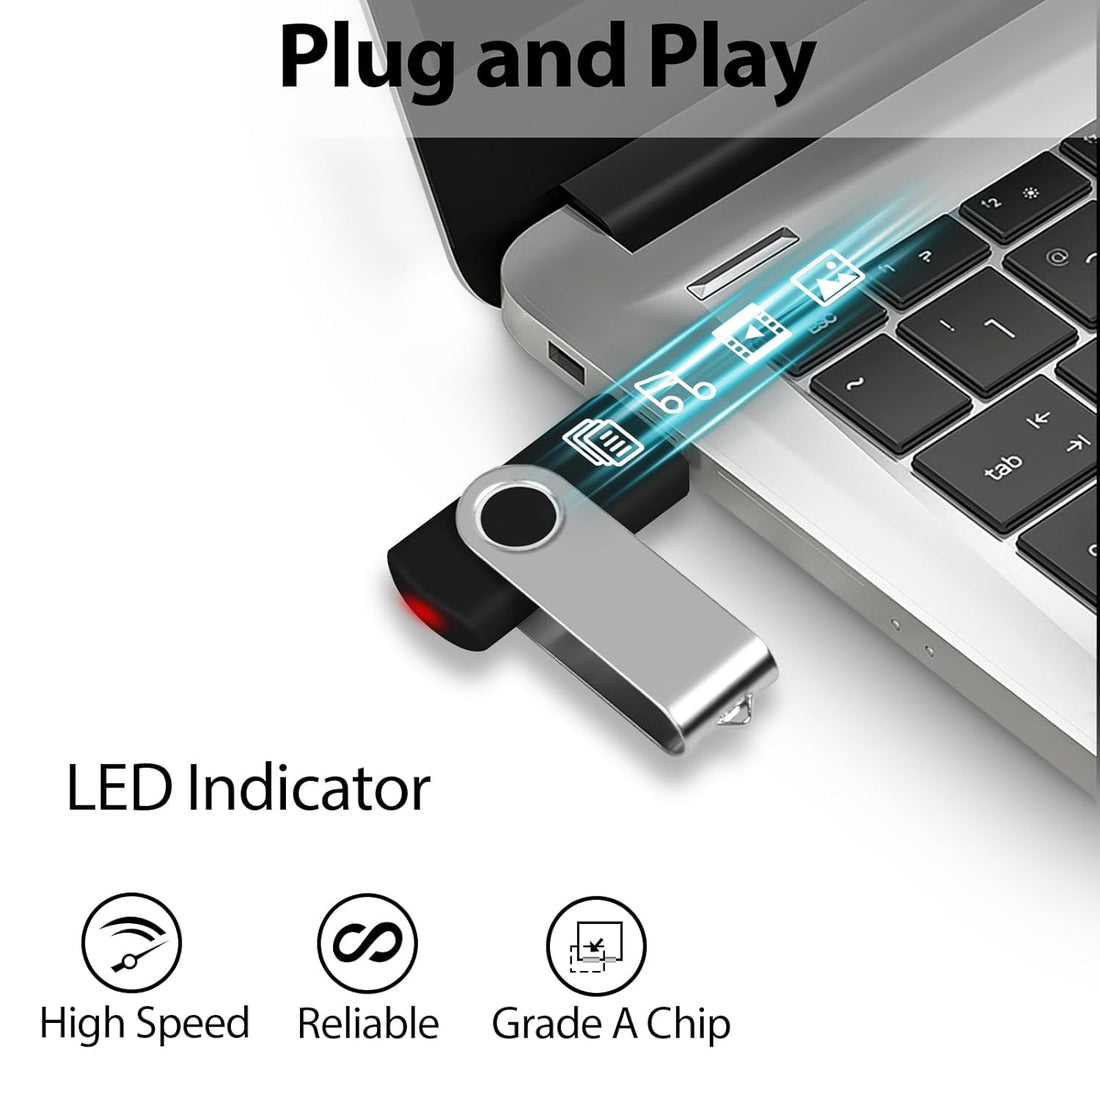 AreTop 16GB Flash Drives 50 Pack, USB 2.0 Swivel Thumb Drives Bulk Pendrive USB Memory Stick Jump Drive USB Drives 16GB 50 Pack Flash Drives Bulk (50 Pack 16GB,Mix Color)